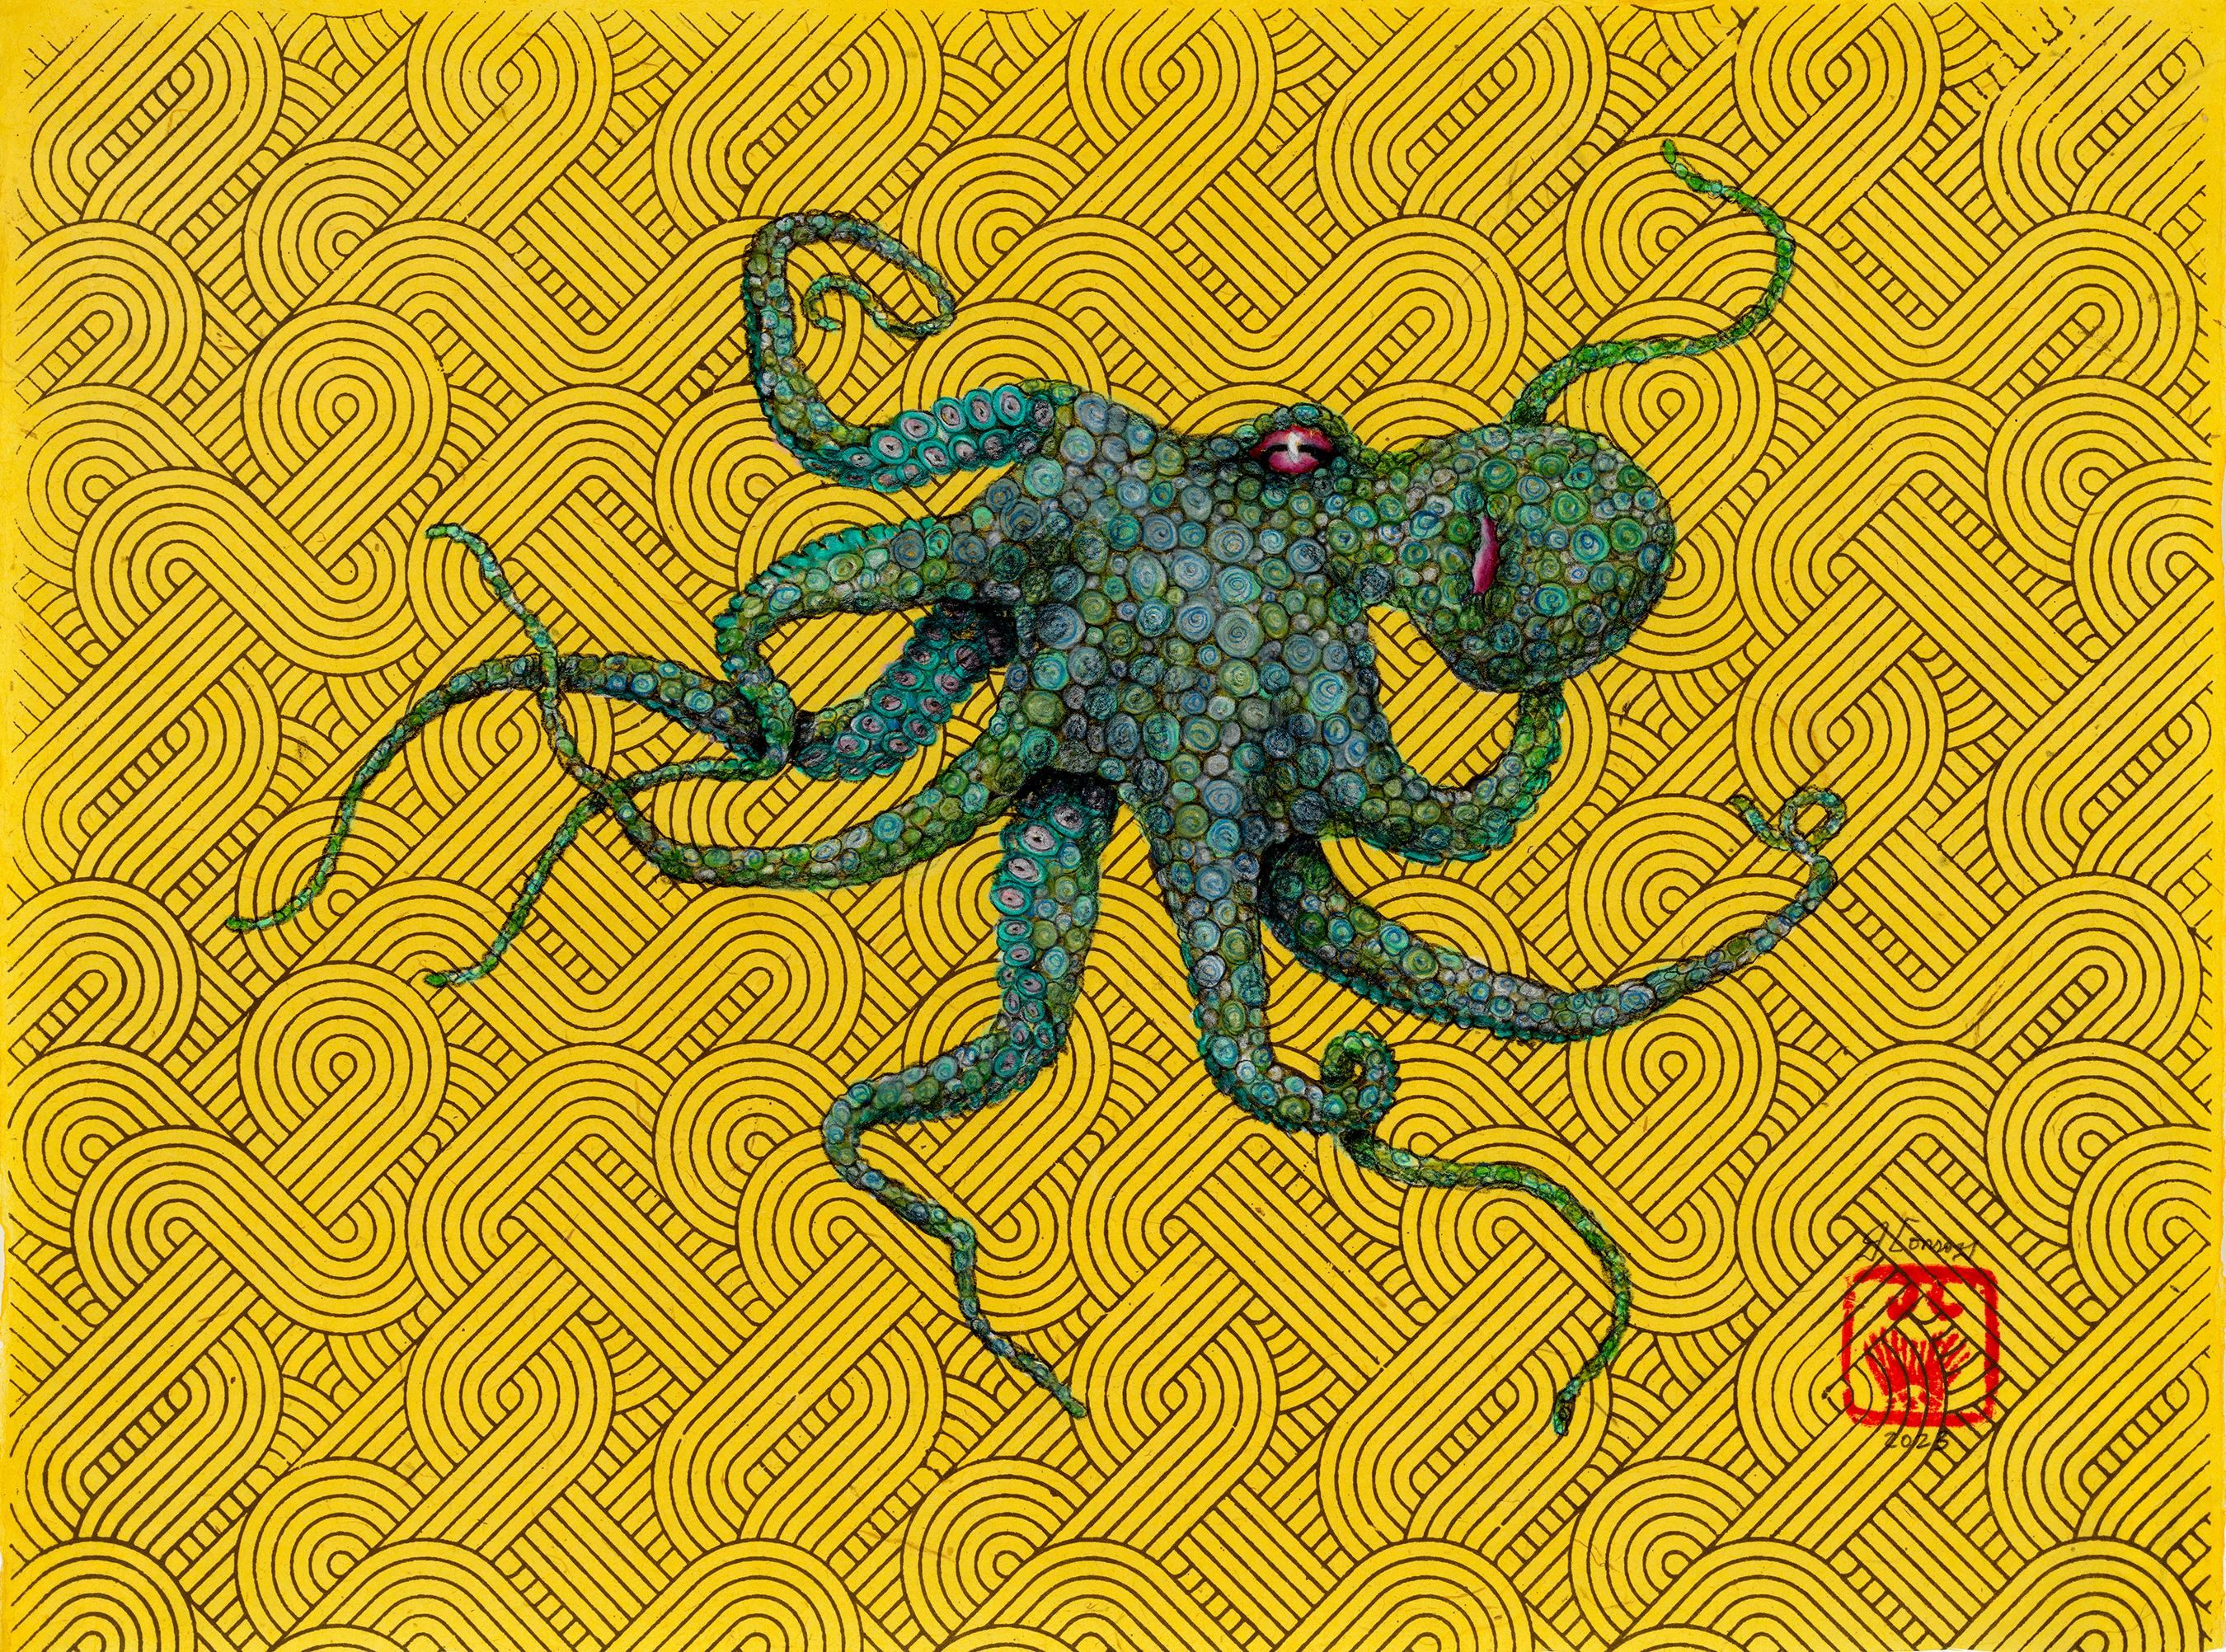 Jeff Conroy Animal Art - Goldilocks - Green Goblin - Gyotaku Style Sumi Ink Painting of an Octopus